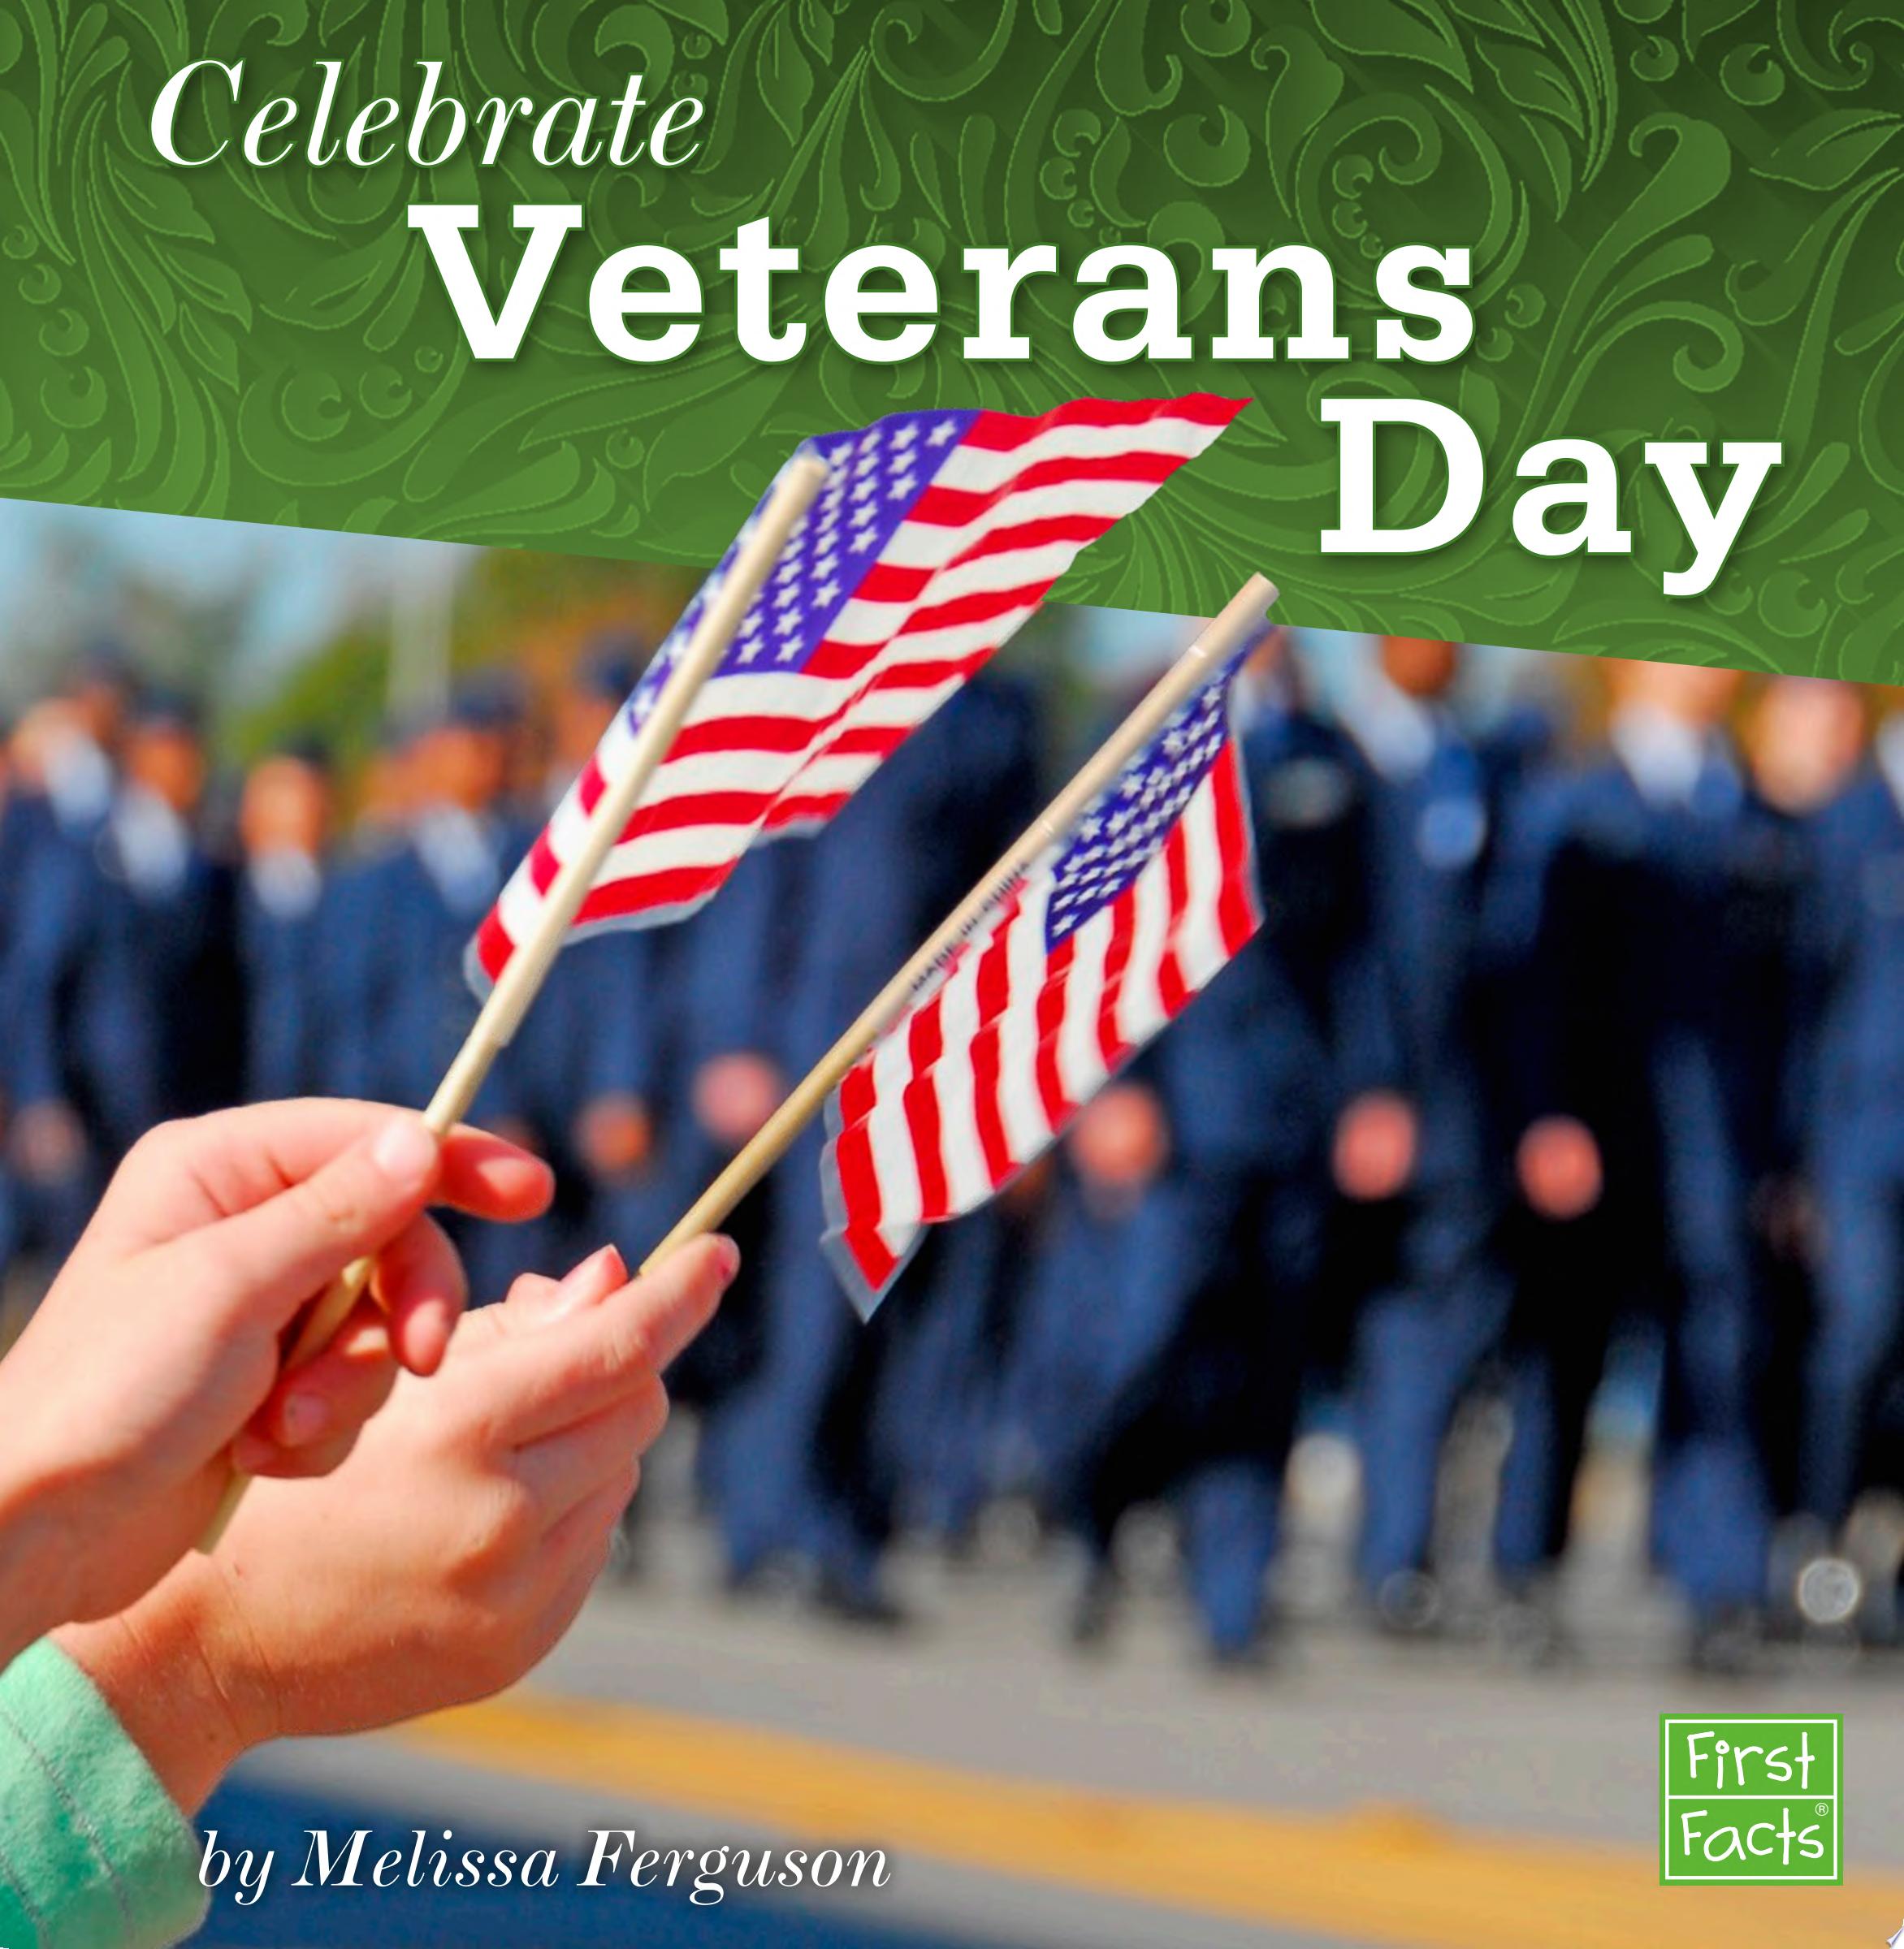 Image for "Celebrate Veterans Day"